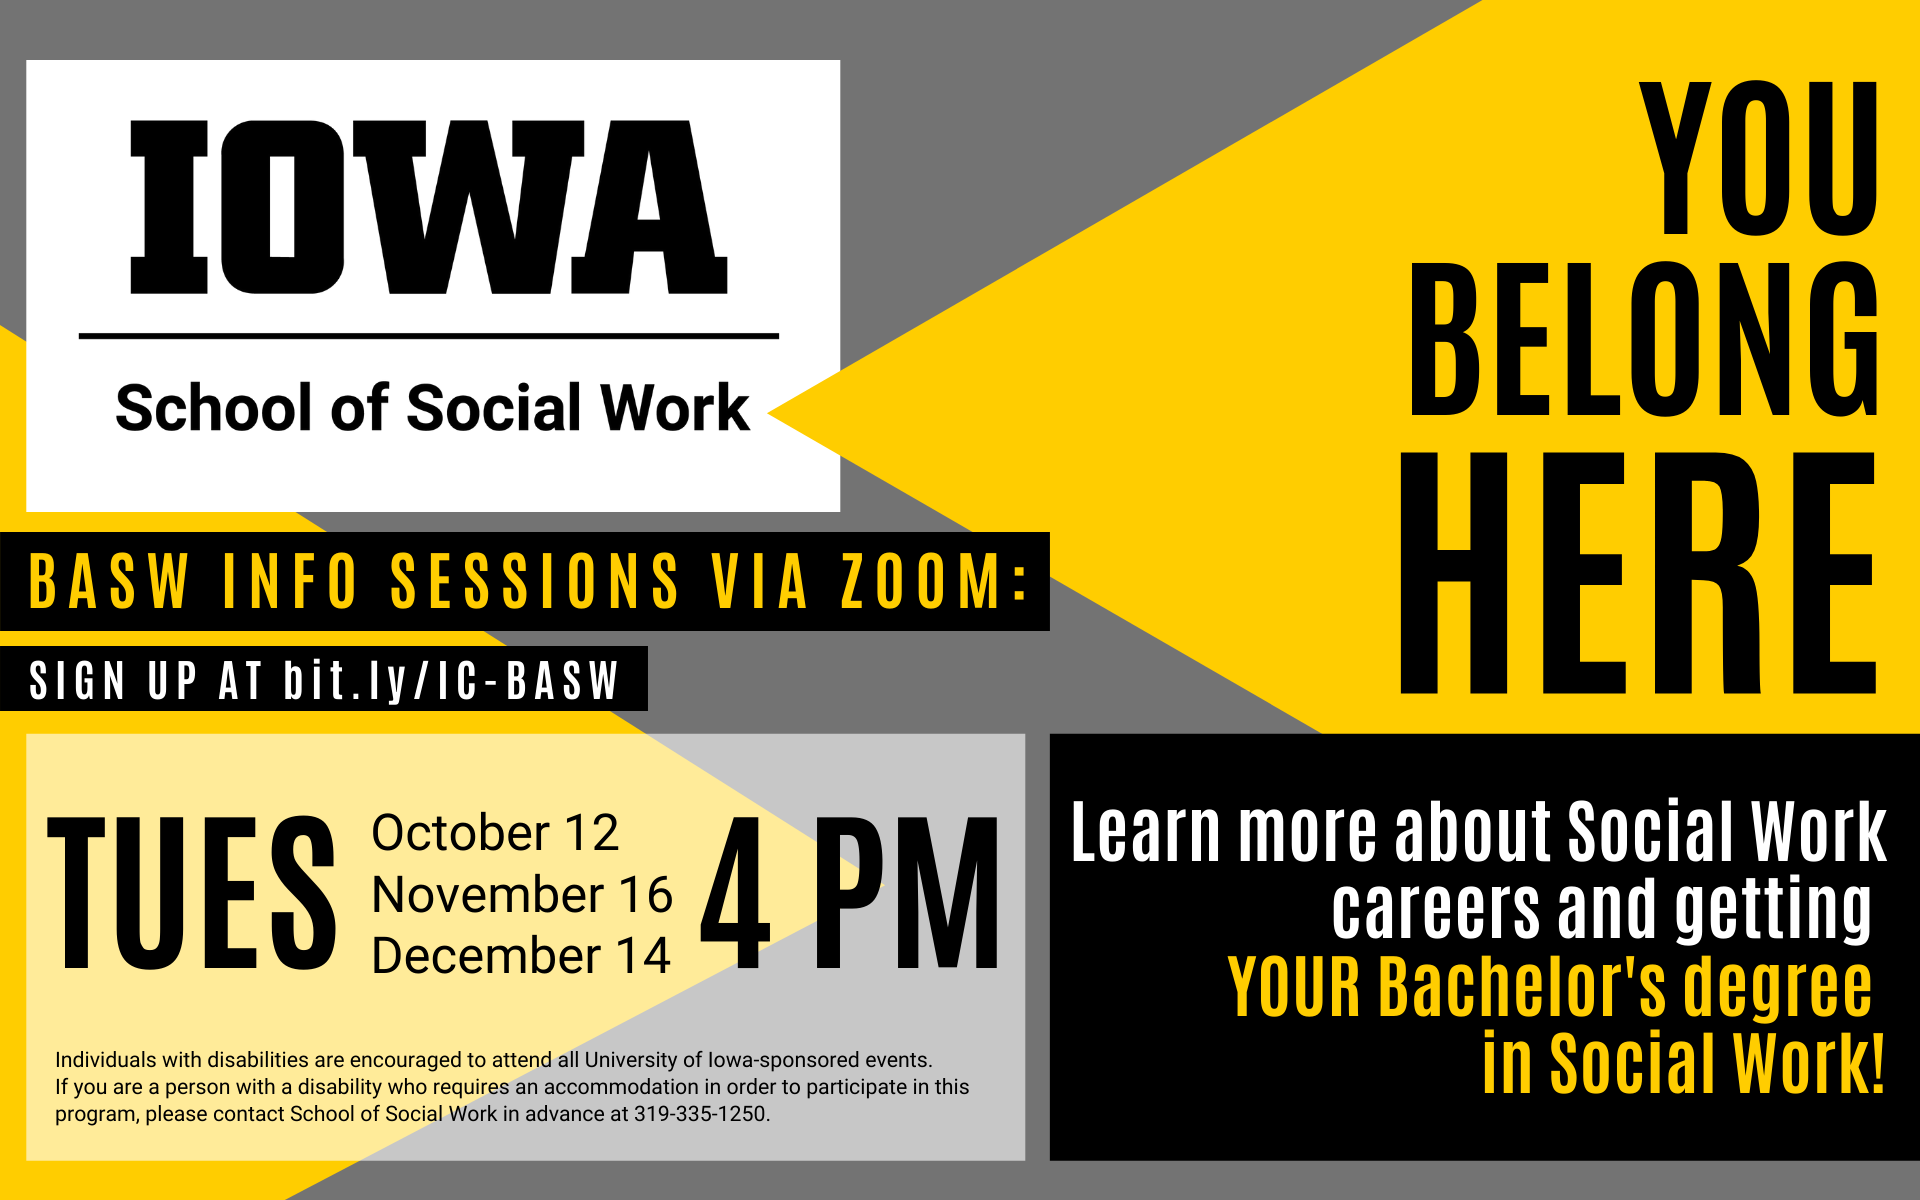 You belong here: Iowa School of Social Work